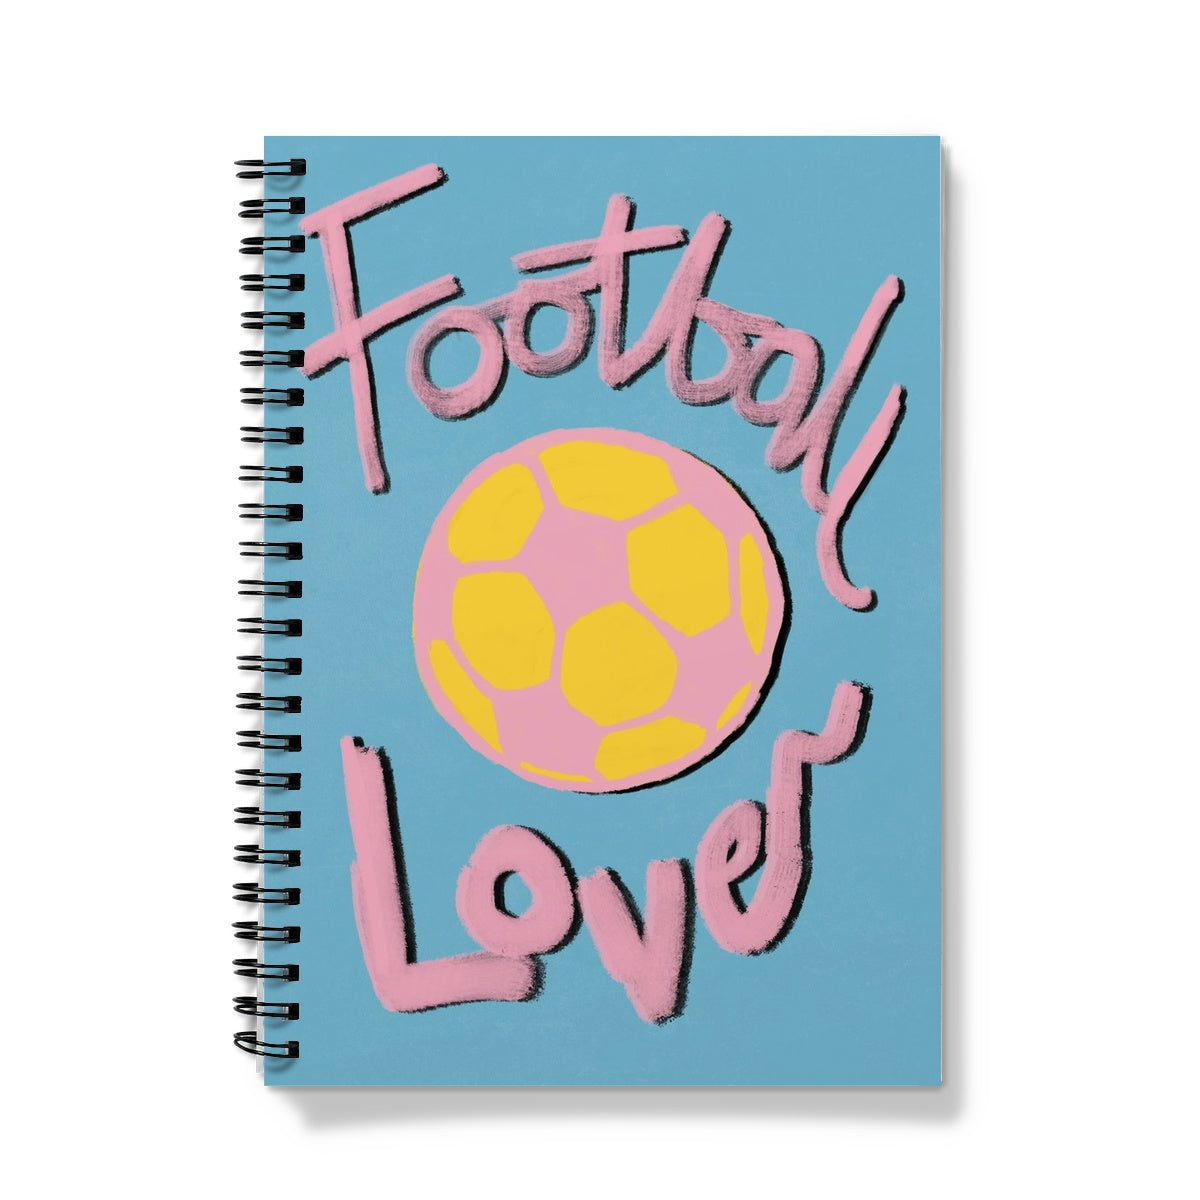 Football Lover Print - Blue, Yellow, Pink Notebook